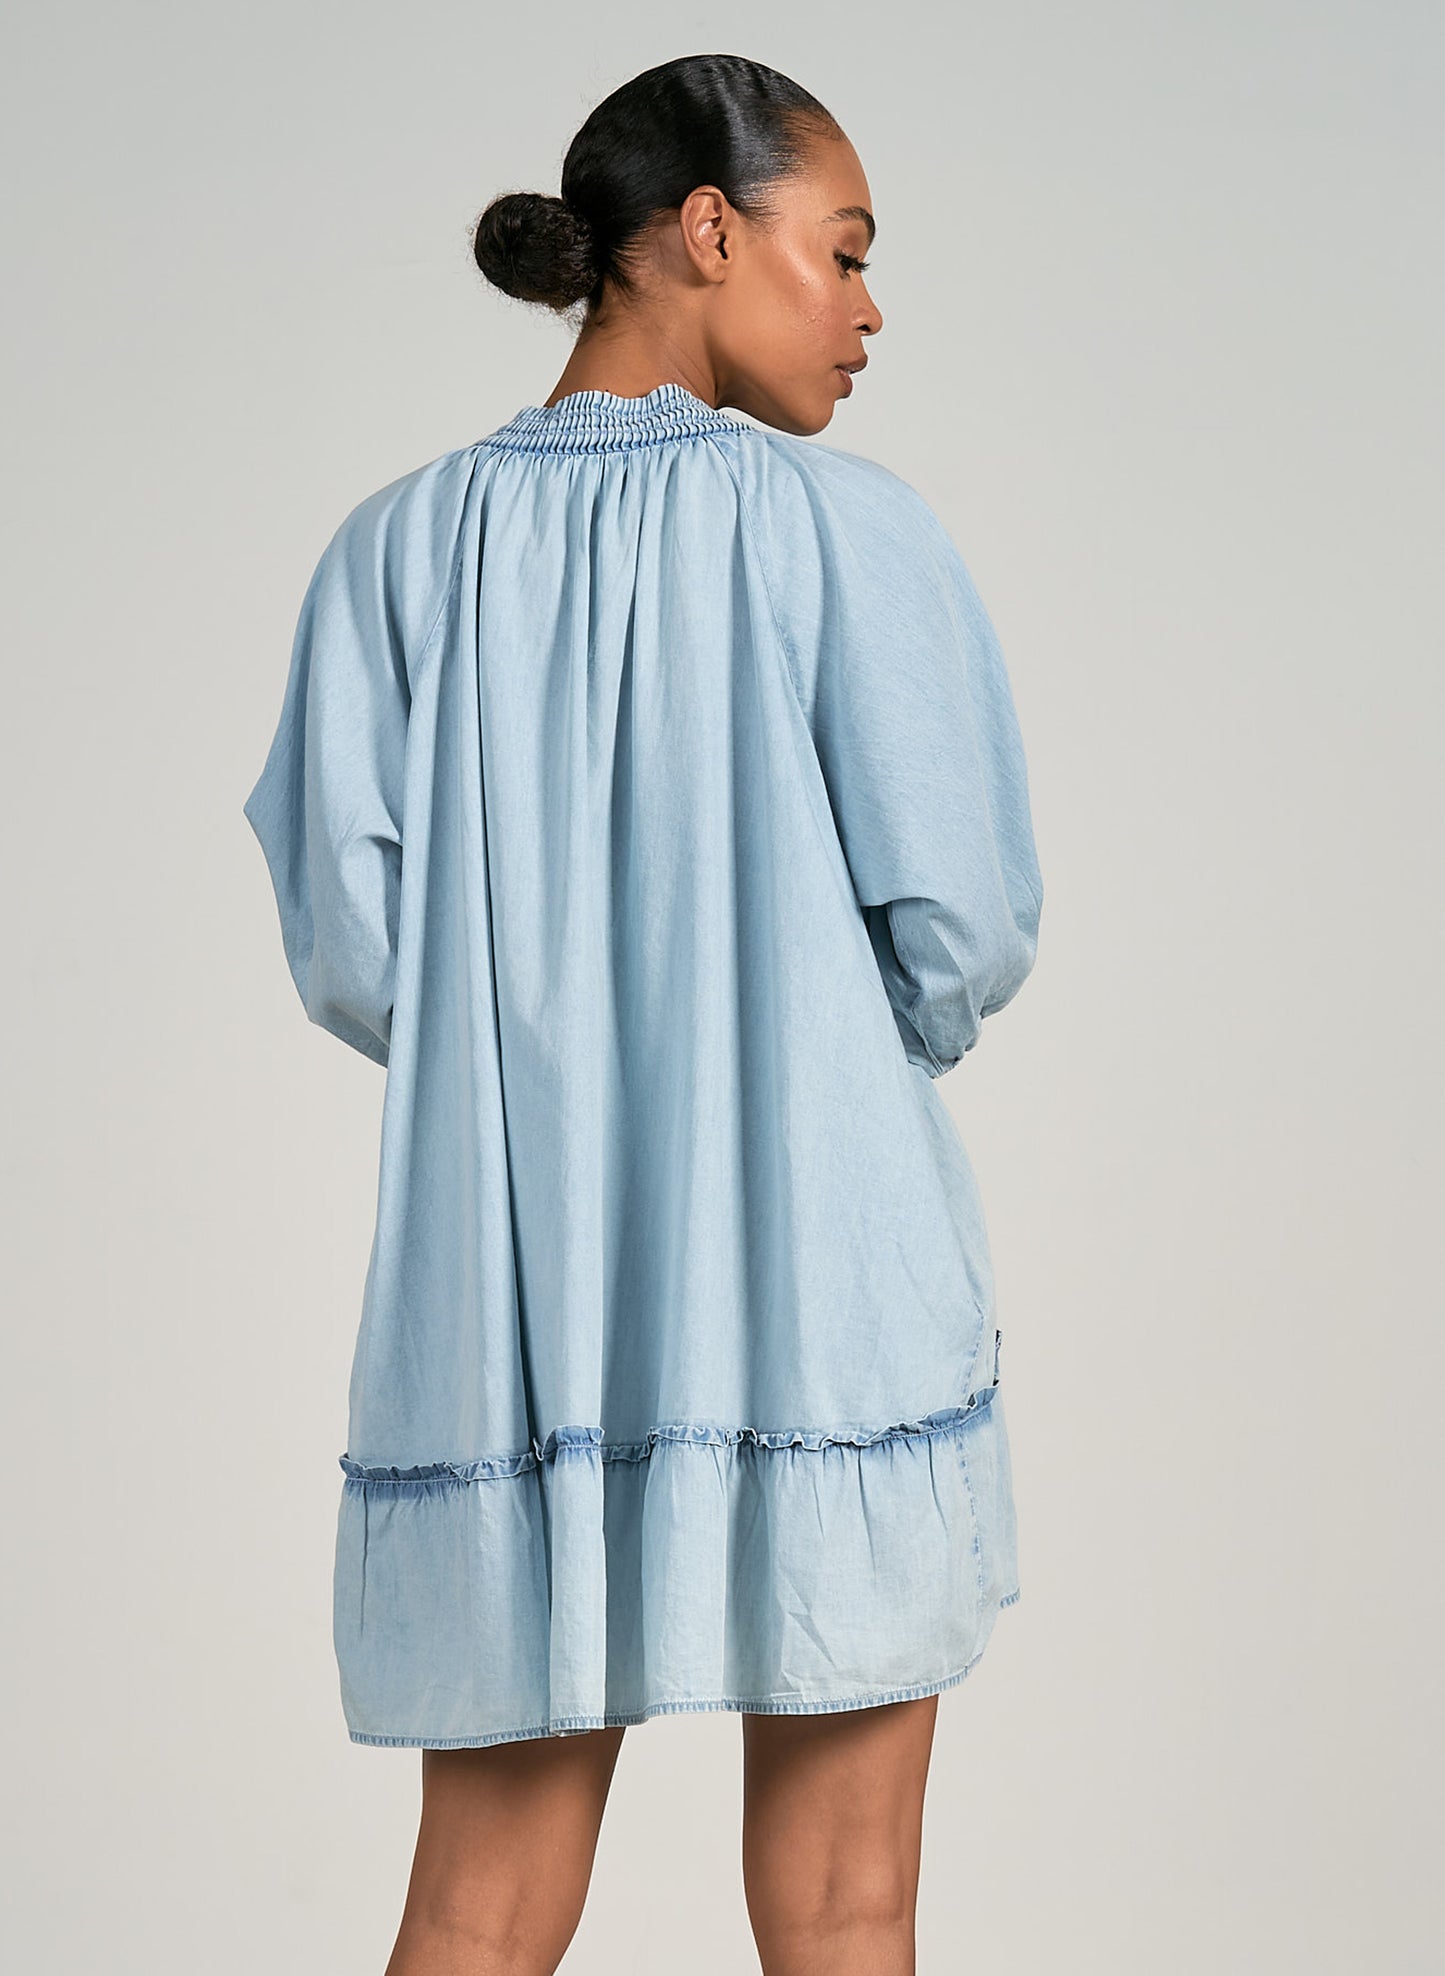 Elan Elan 3/4 Sleeve Ruffle Bottom Dress - Blue Wash available at The Good Life Boutique